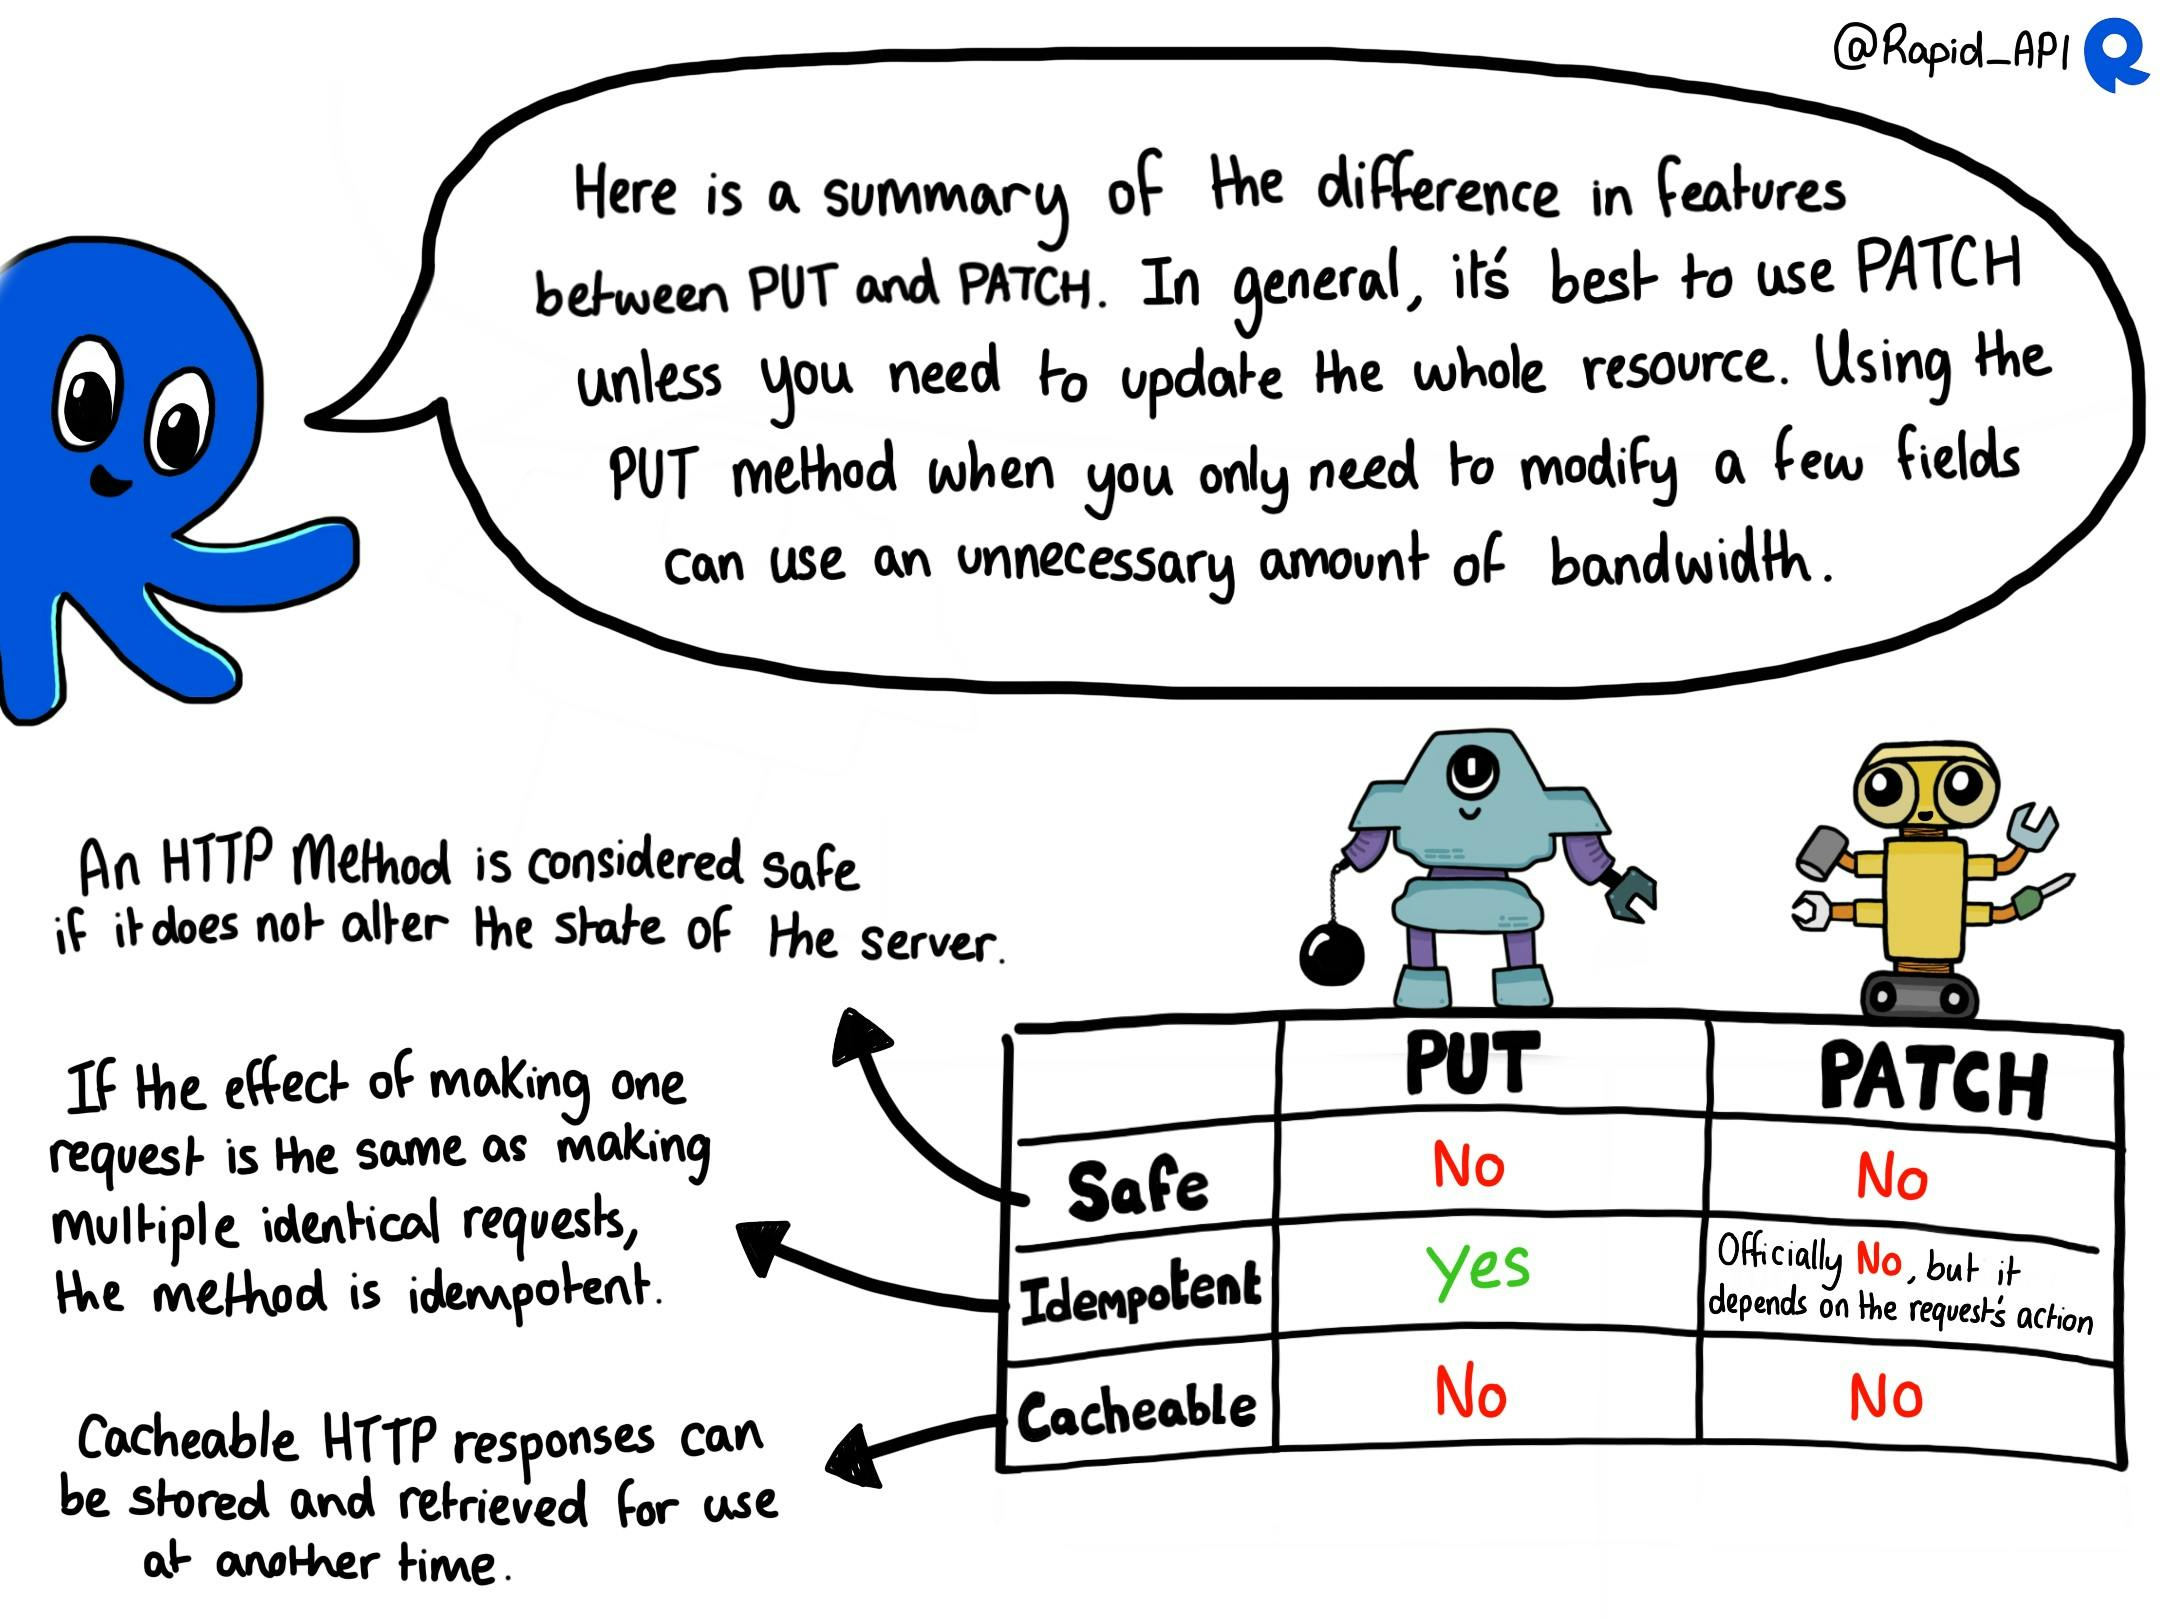 HTTP Methods: PUT vs PATCH